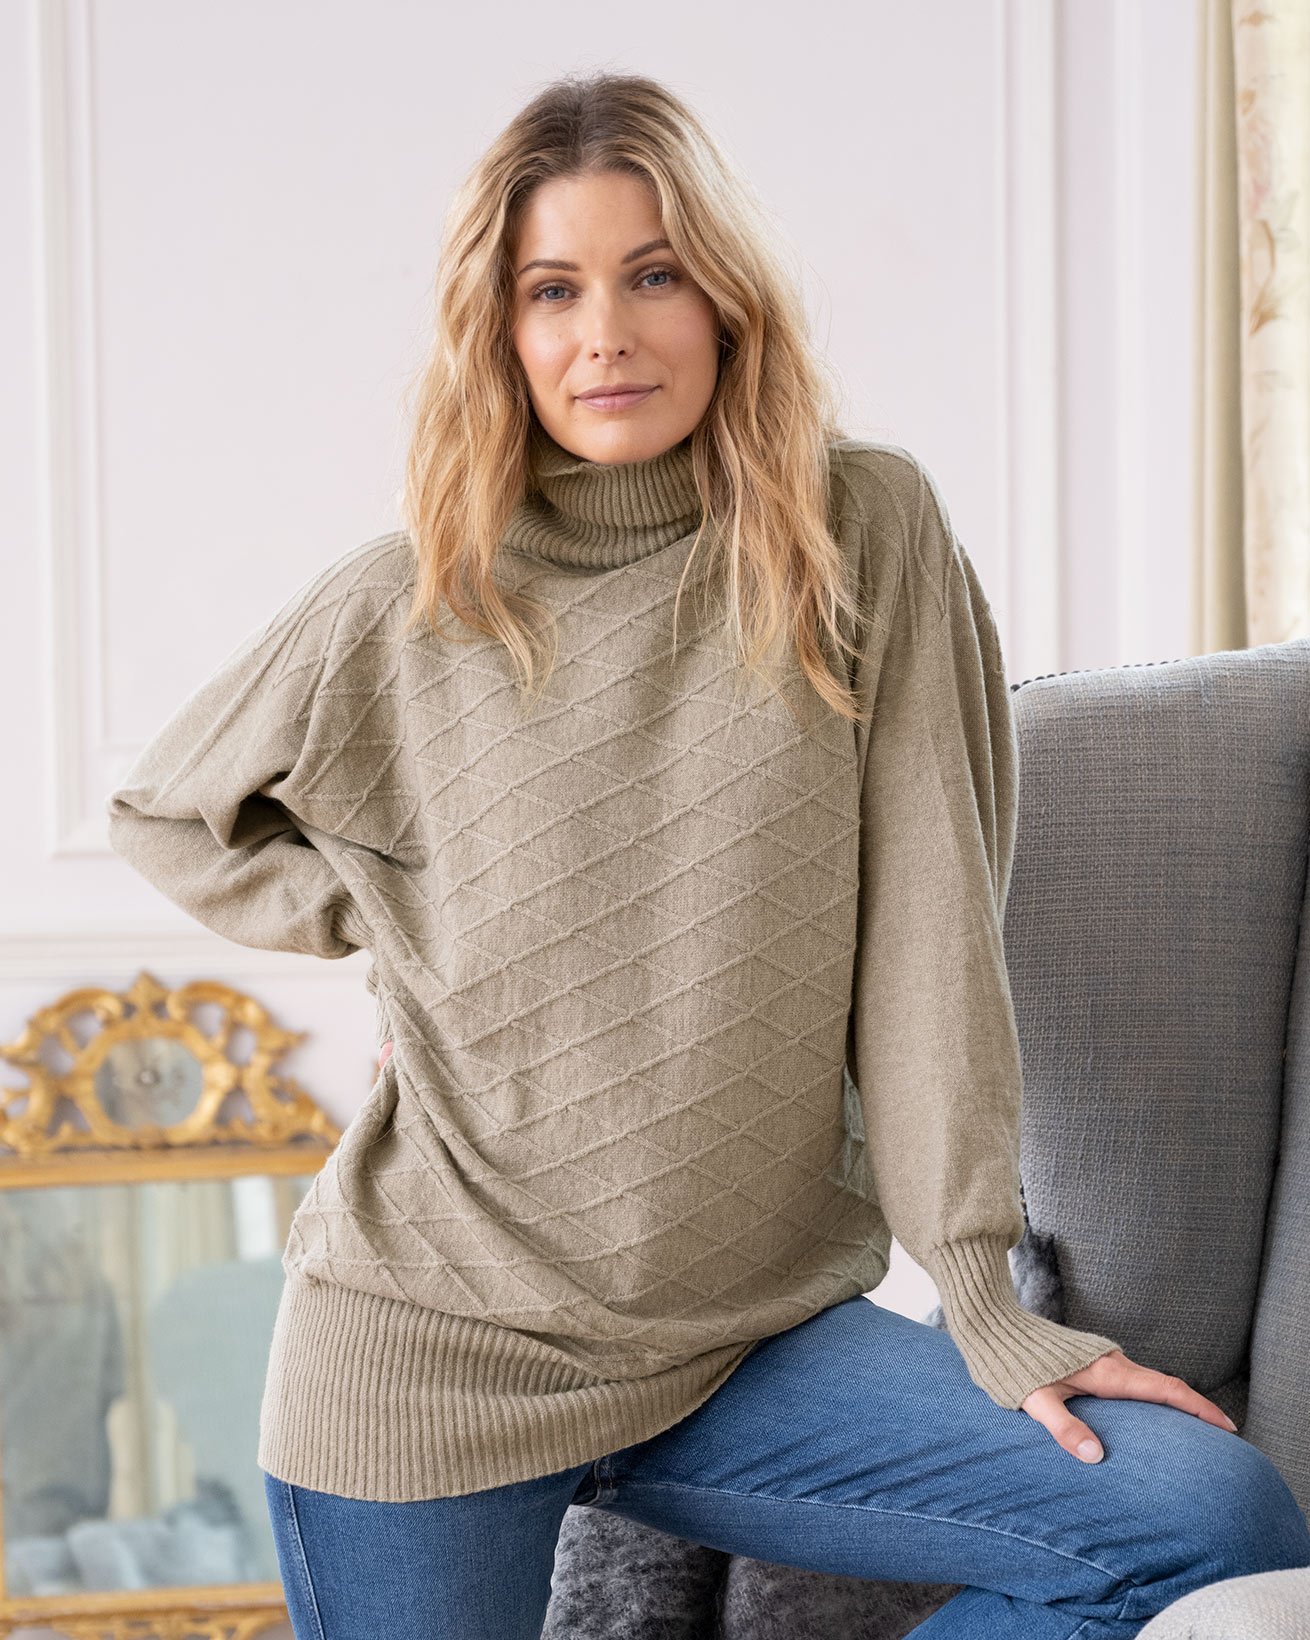 Geelong Courtney Sweater